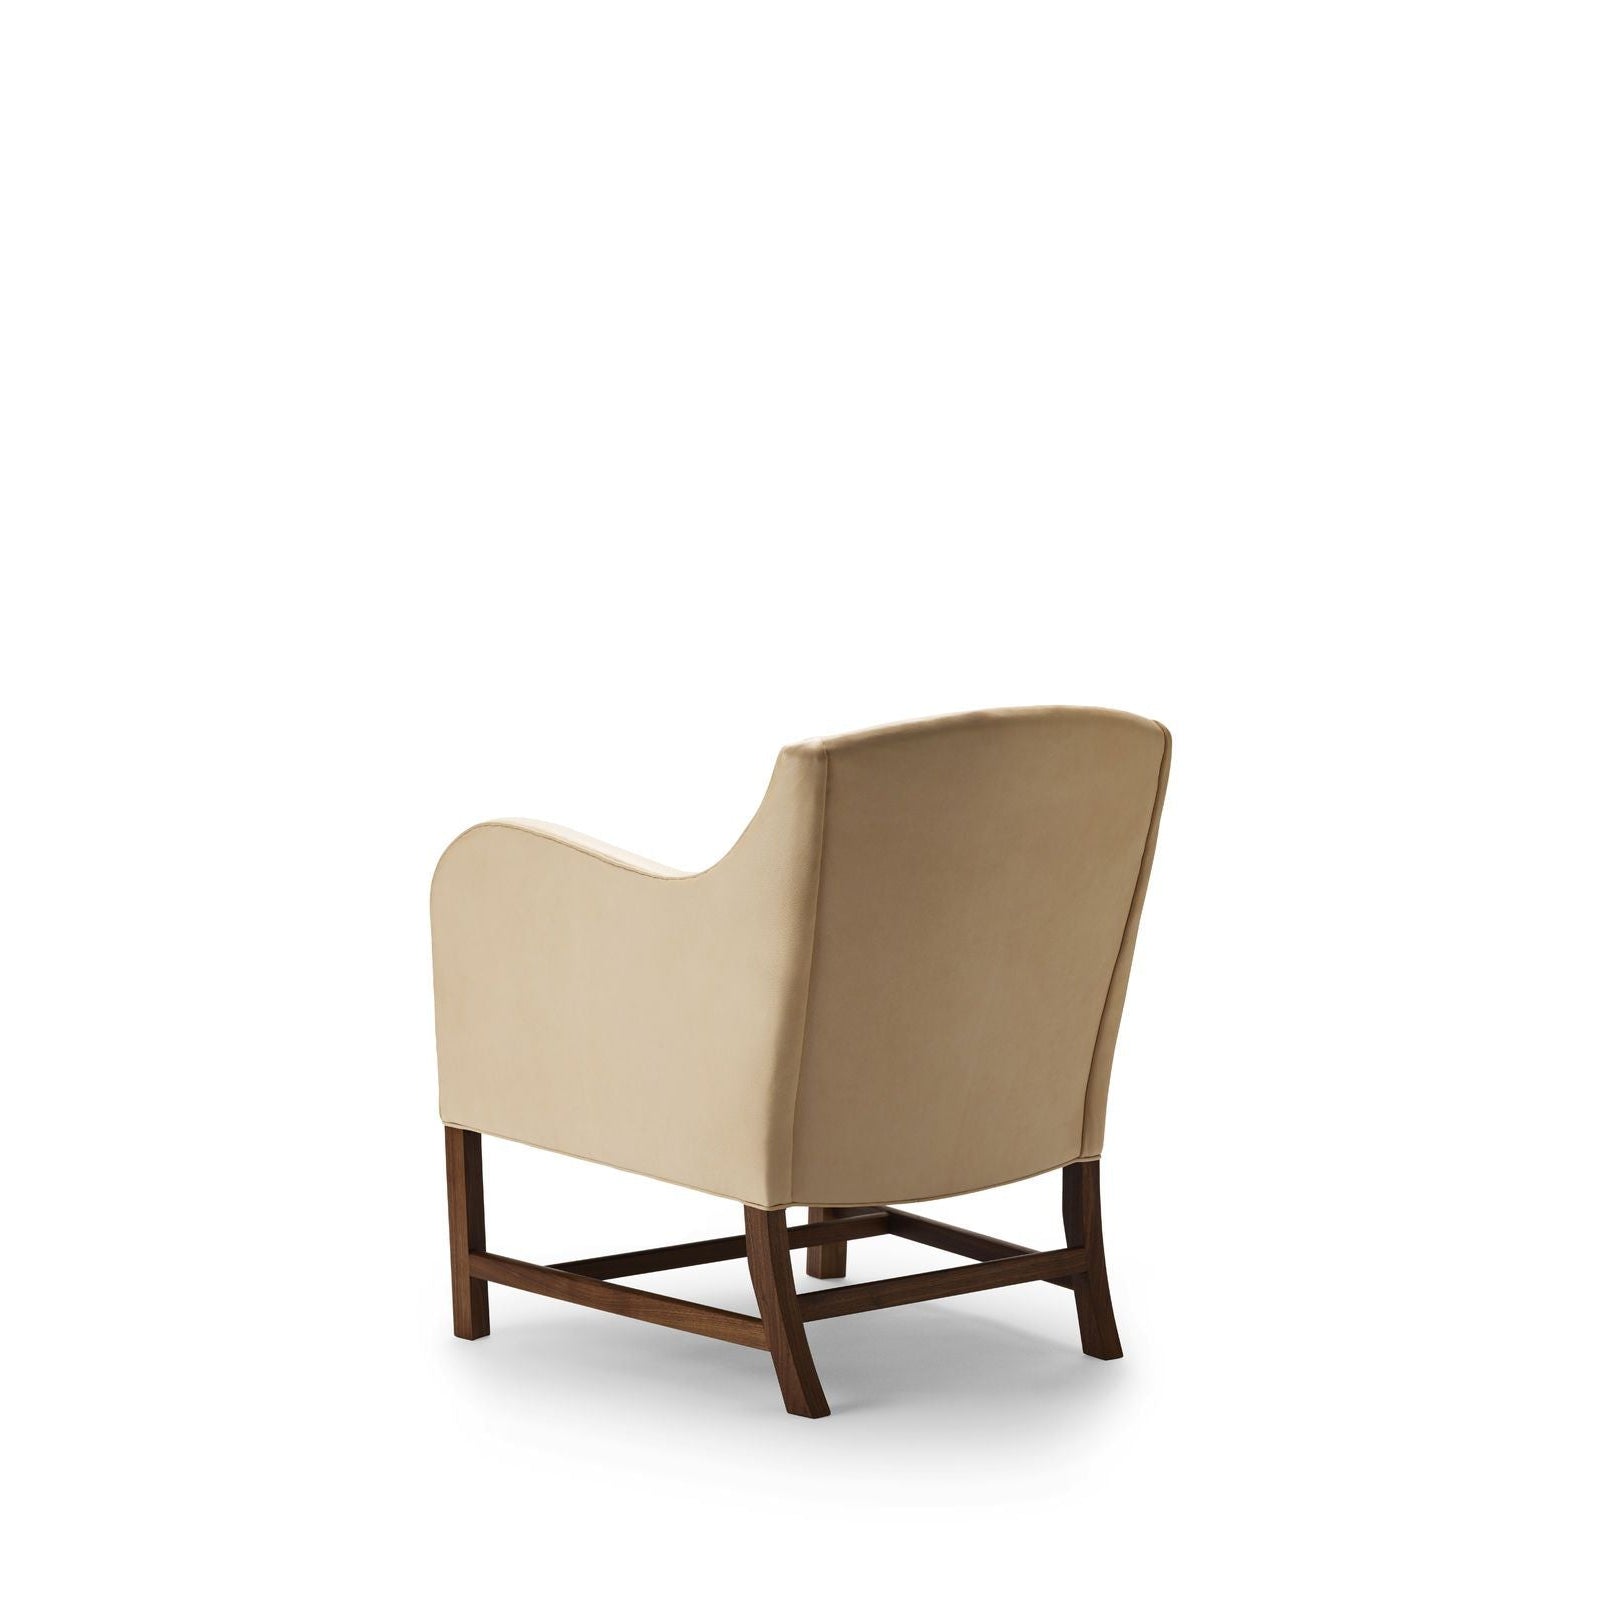 Carl Hansen Kk43960 Mix Chair Oiled Walnut/Goat Nature Leather